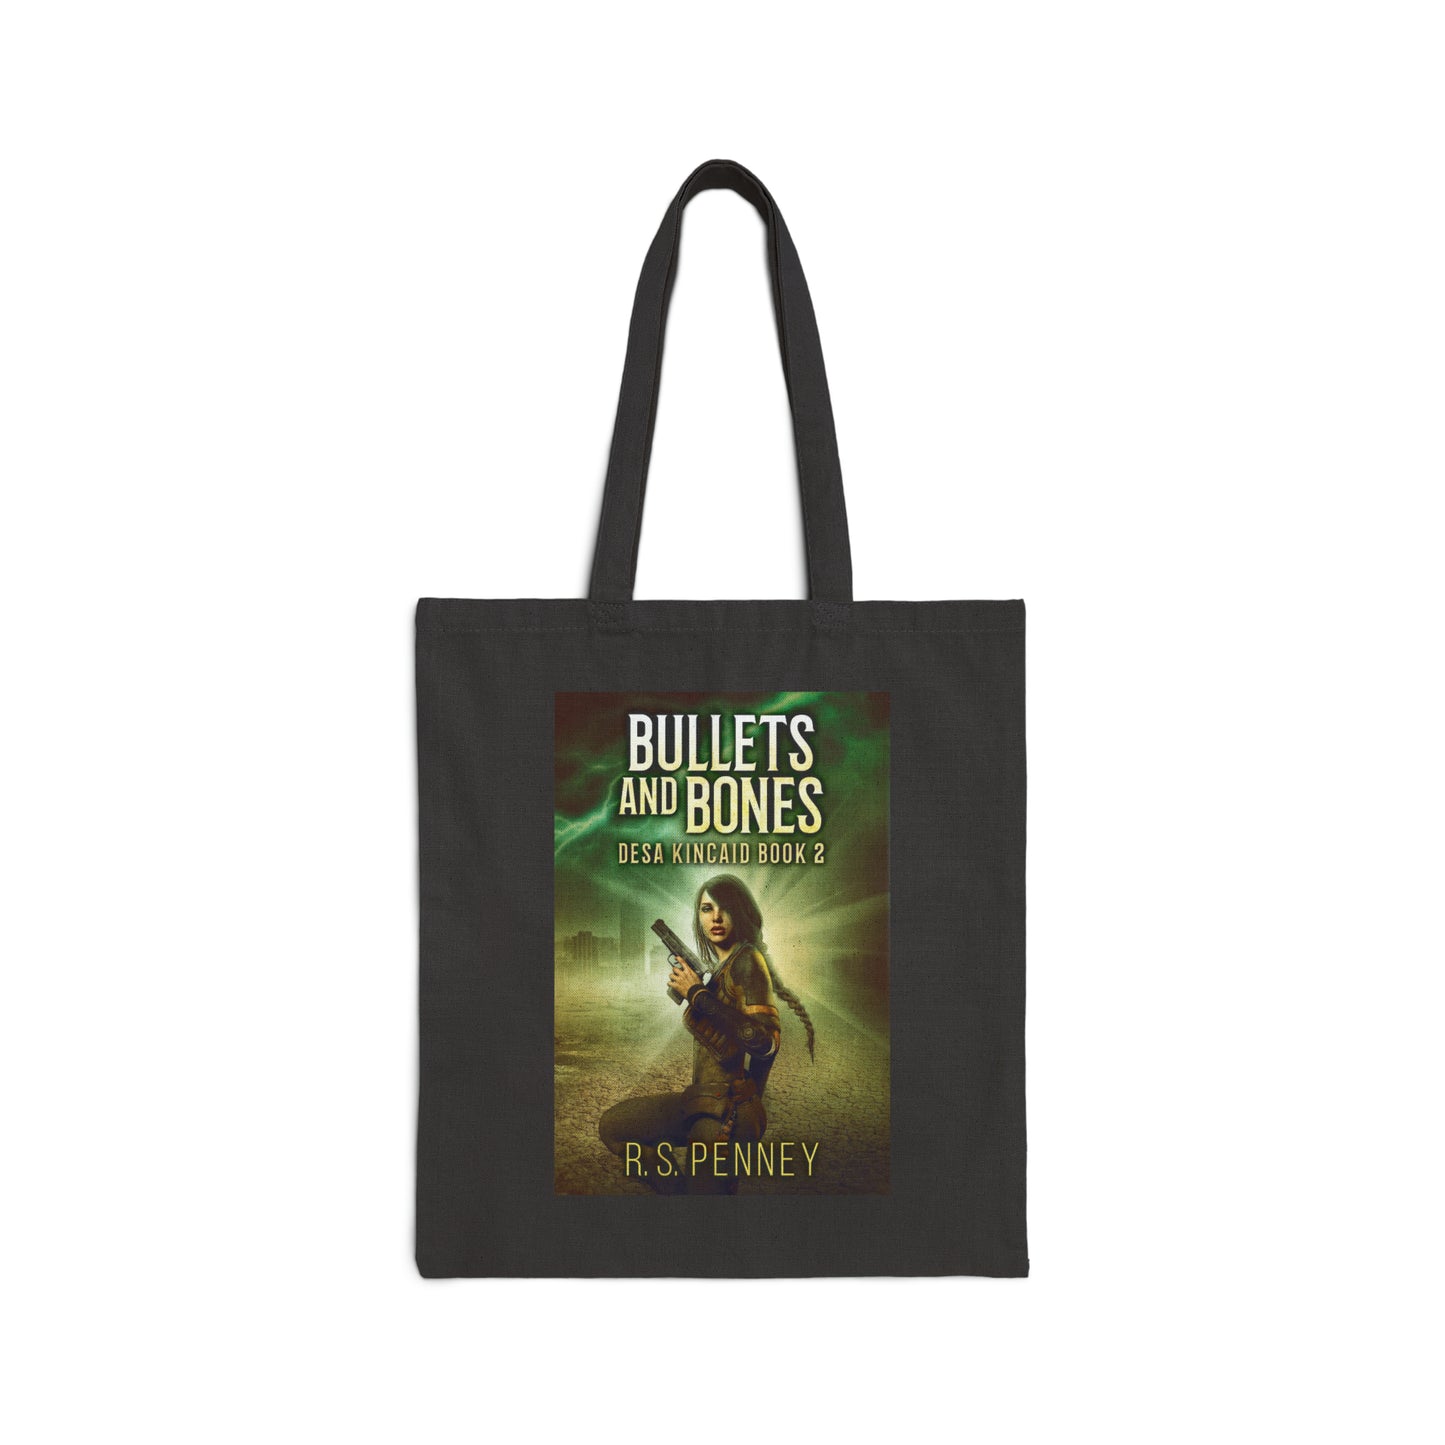 Bullets And Bones - Cotton Canvas Tote Bag